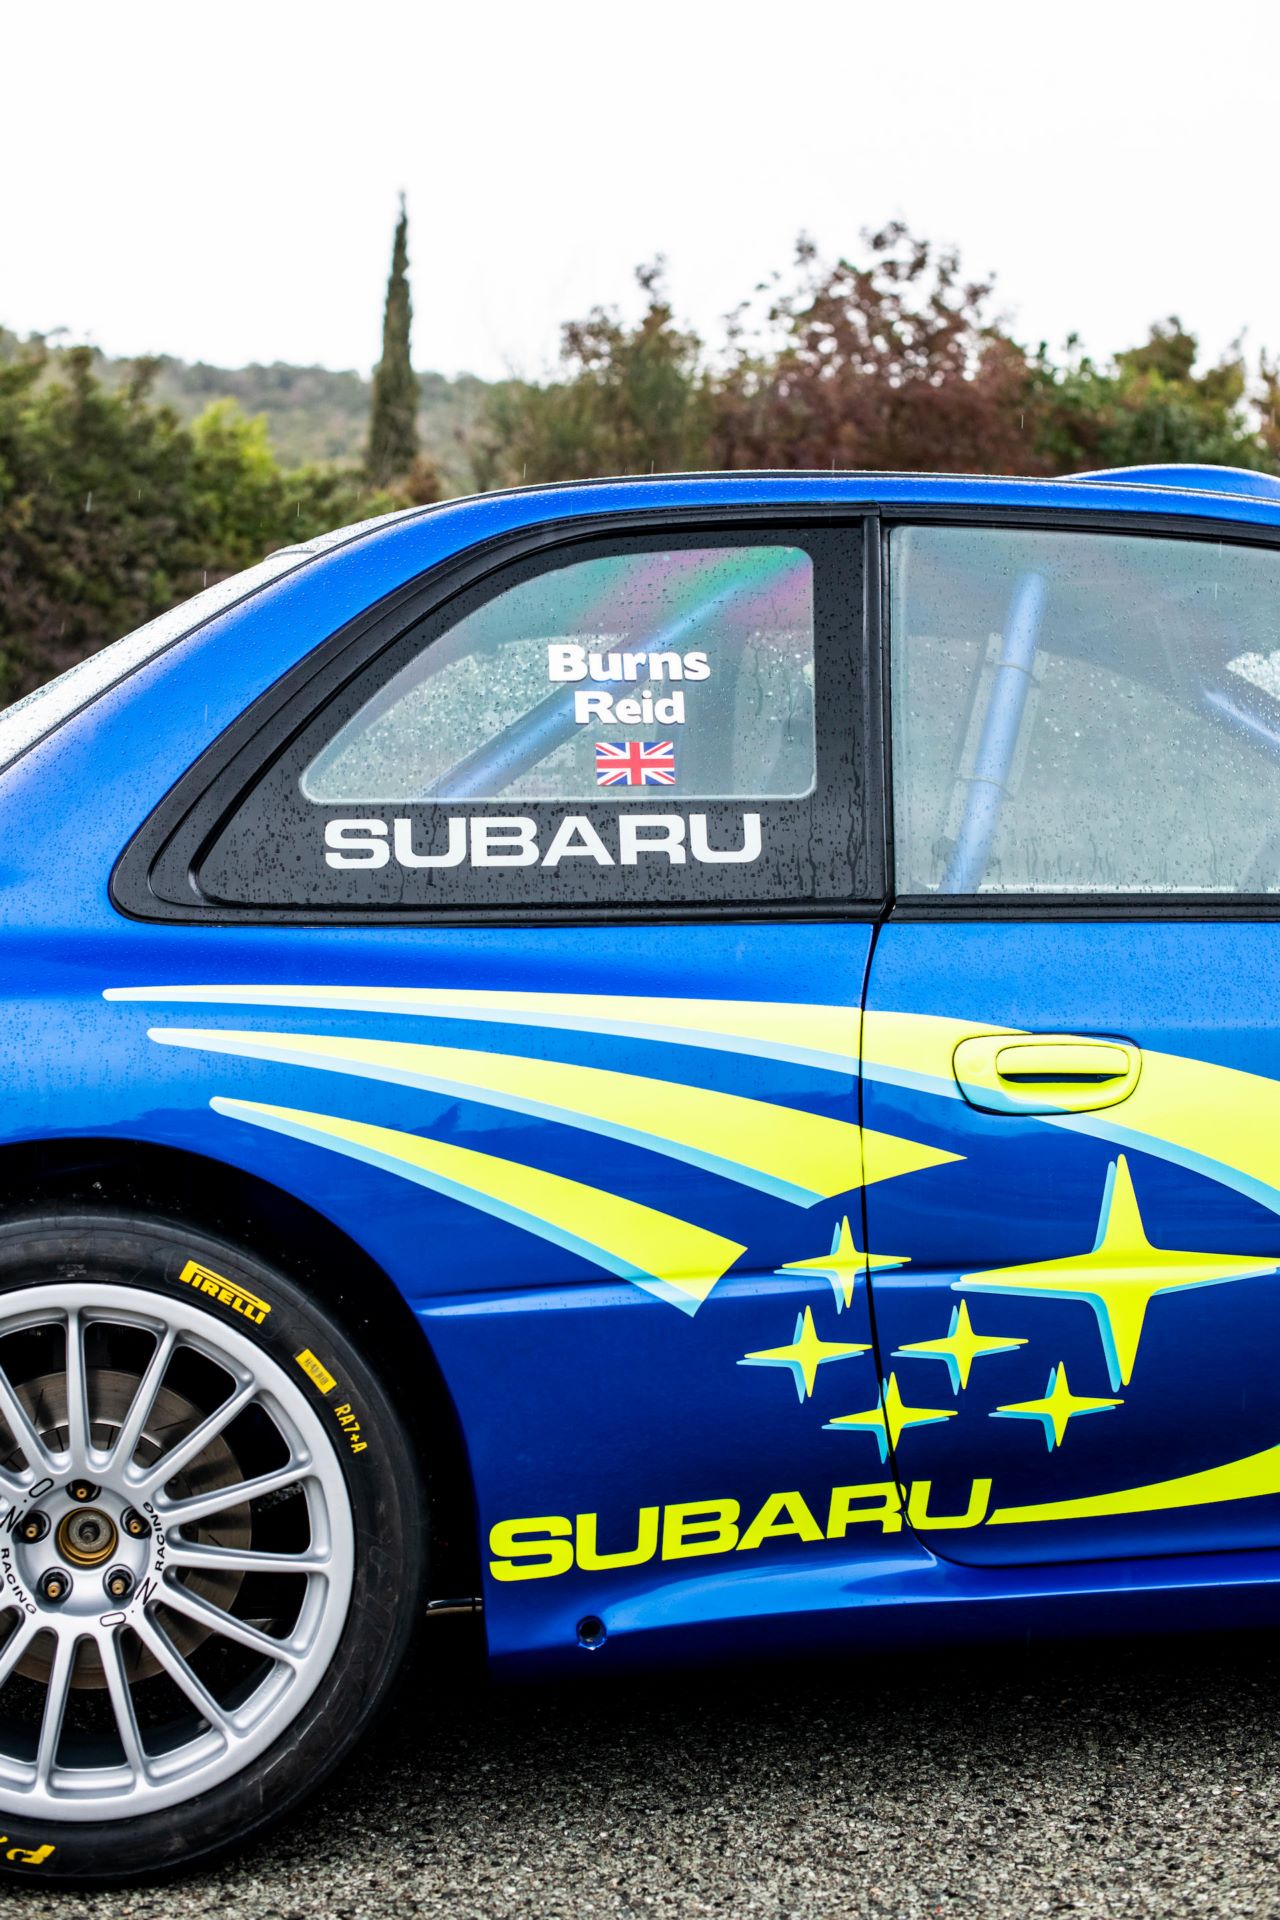 Subaru-Impreza-WRC-Richard-Burns-auction-36